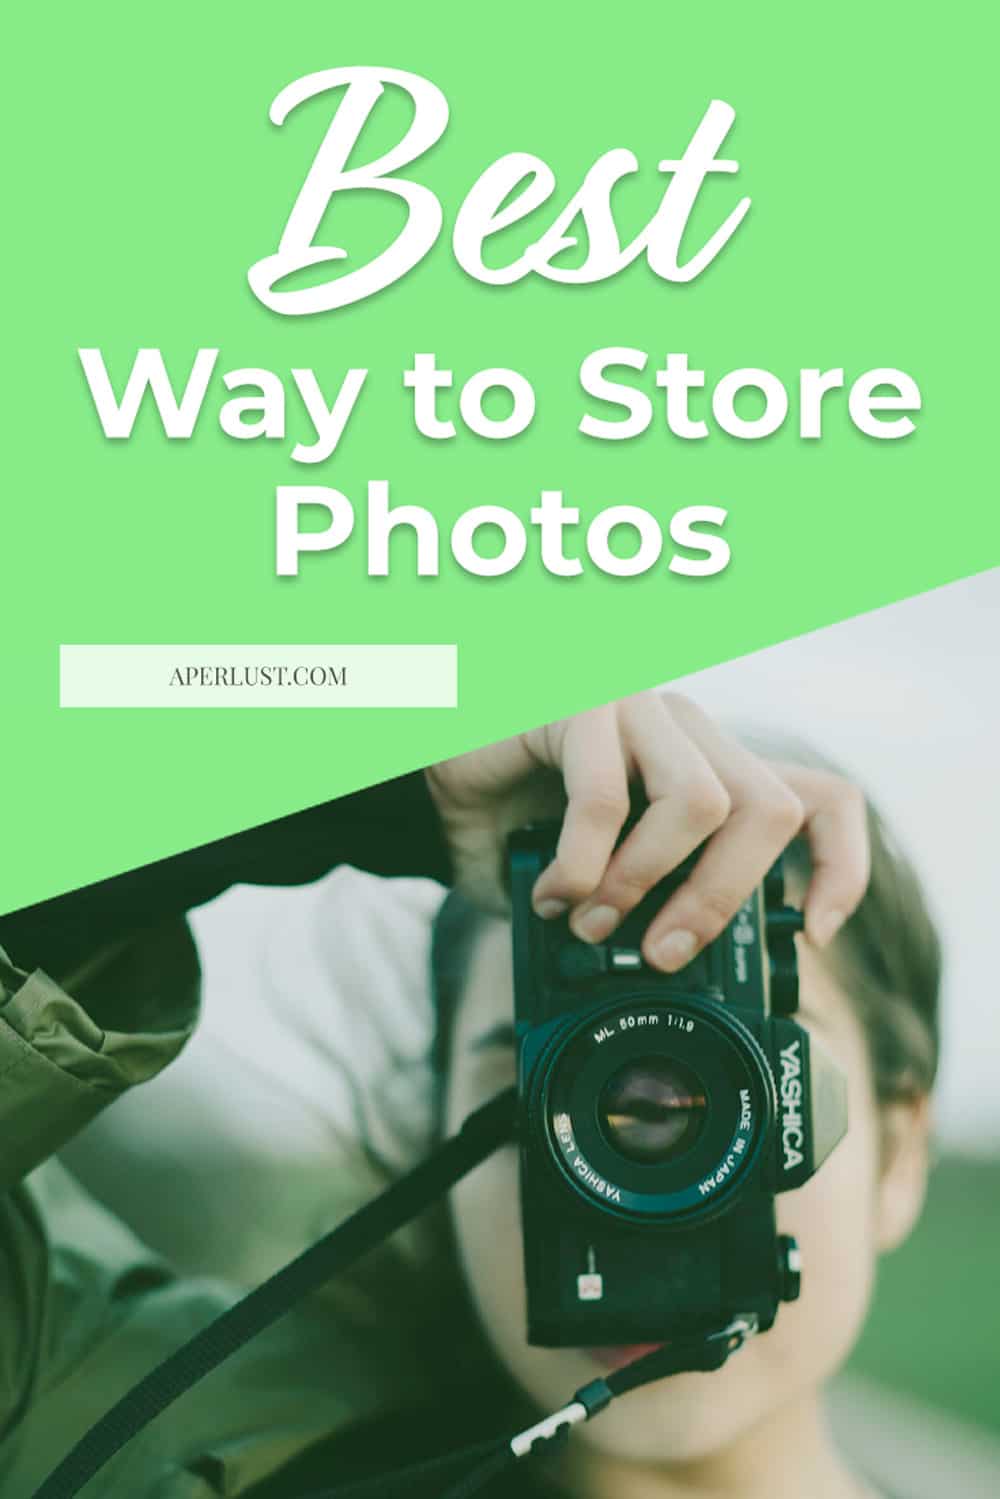 mejor manera de almacenar fotos Pinterest imagen